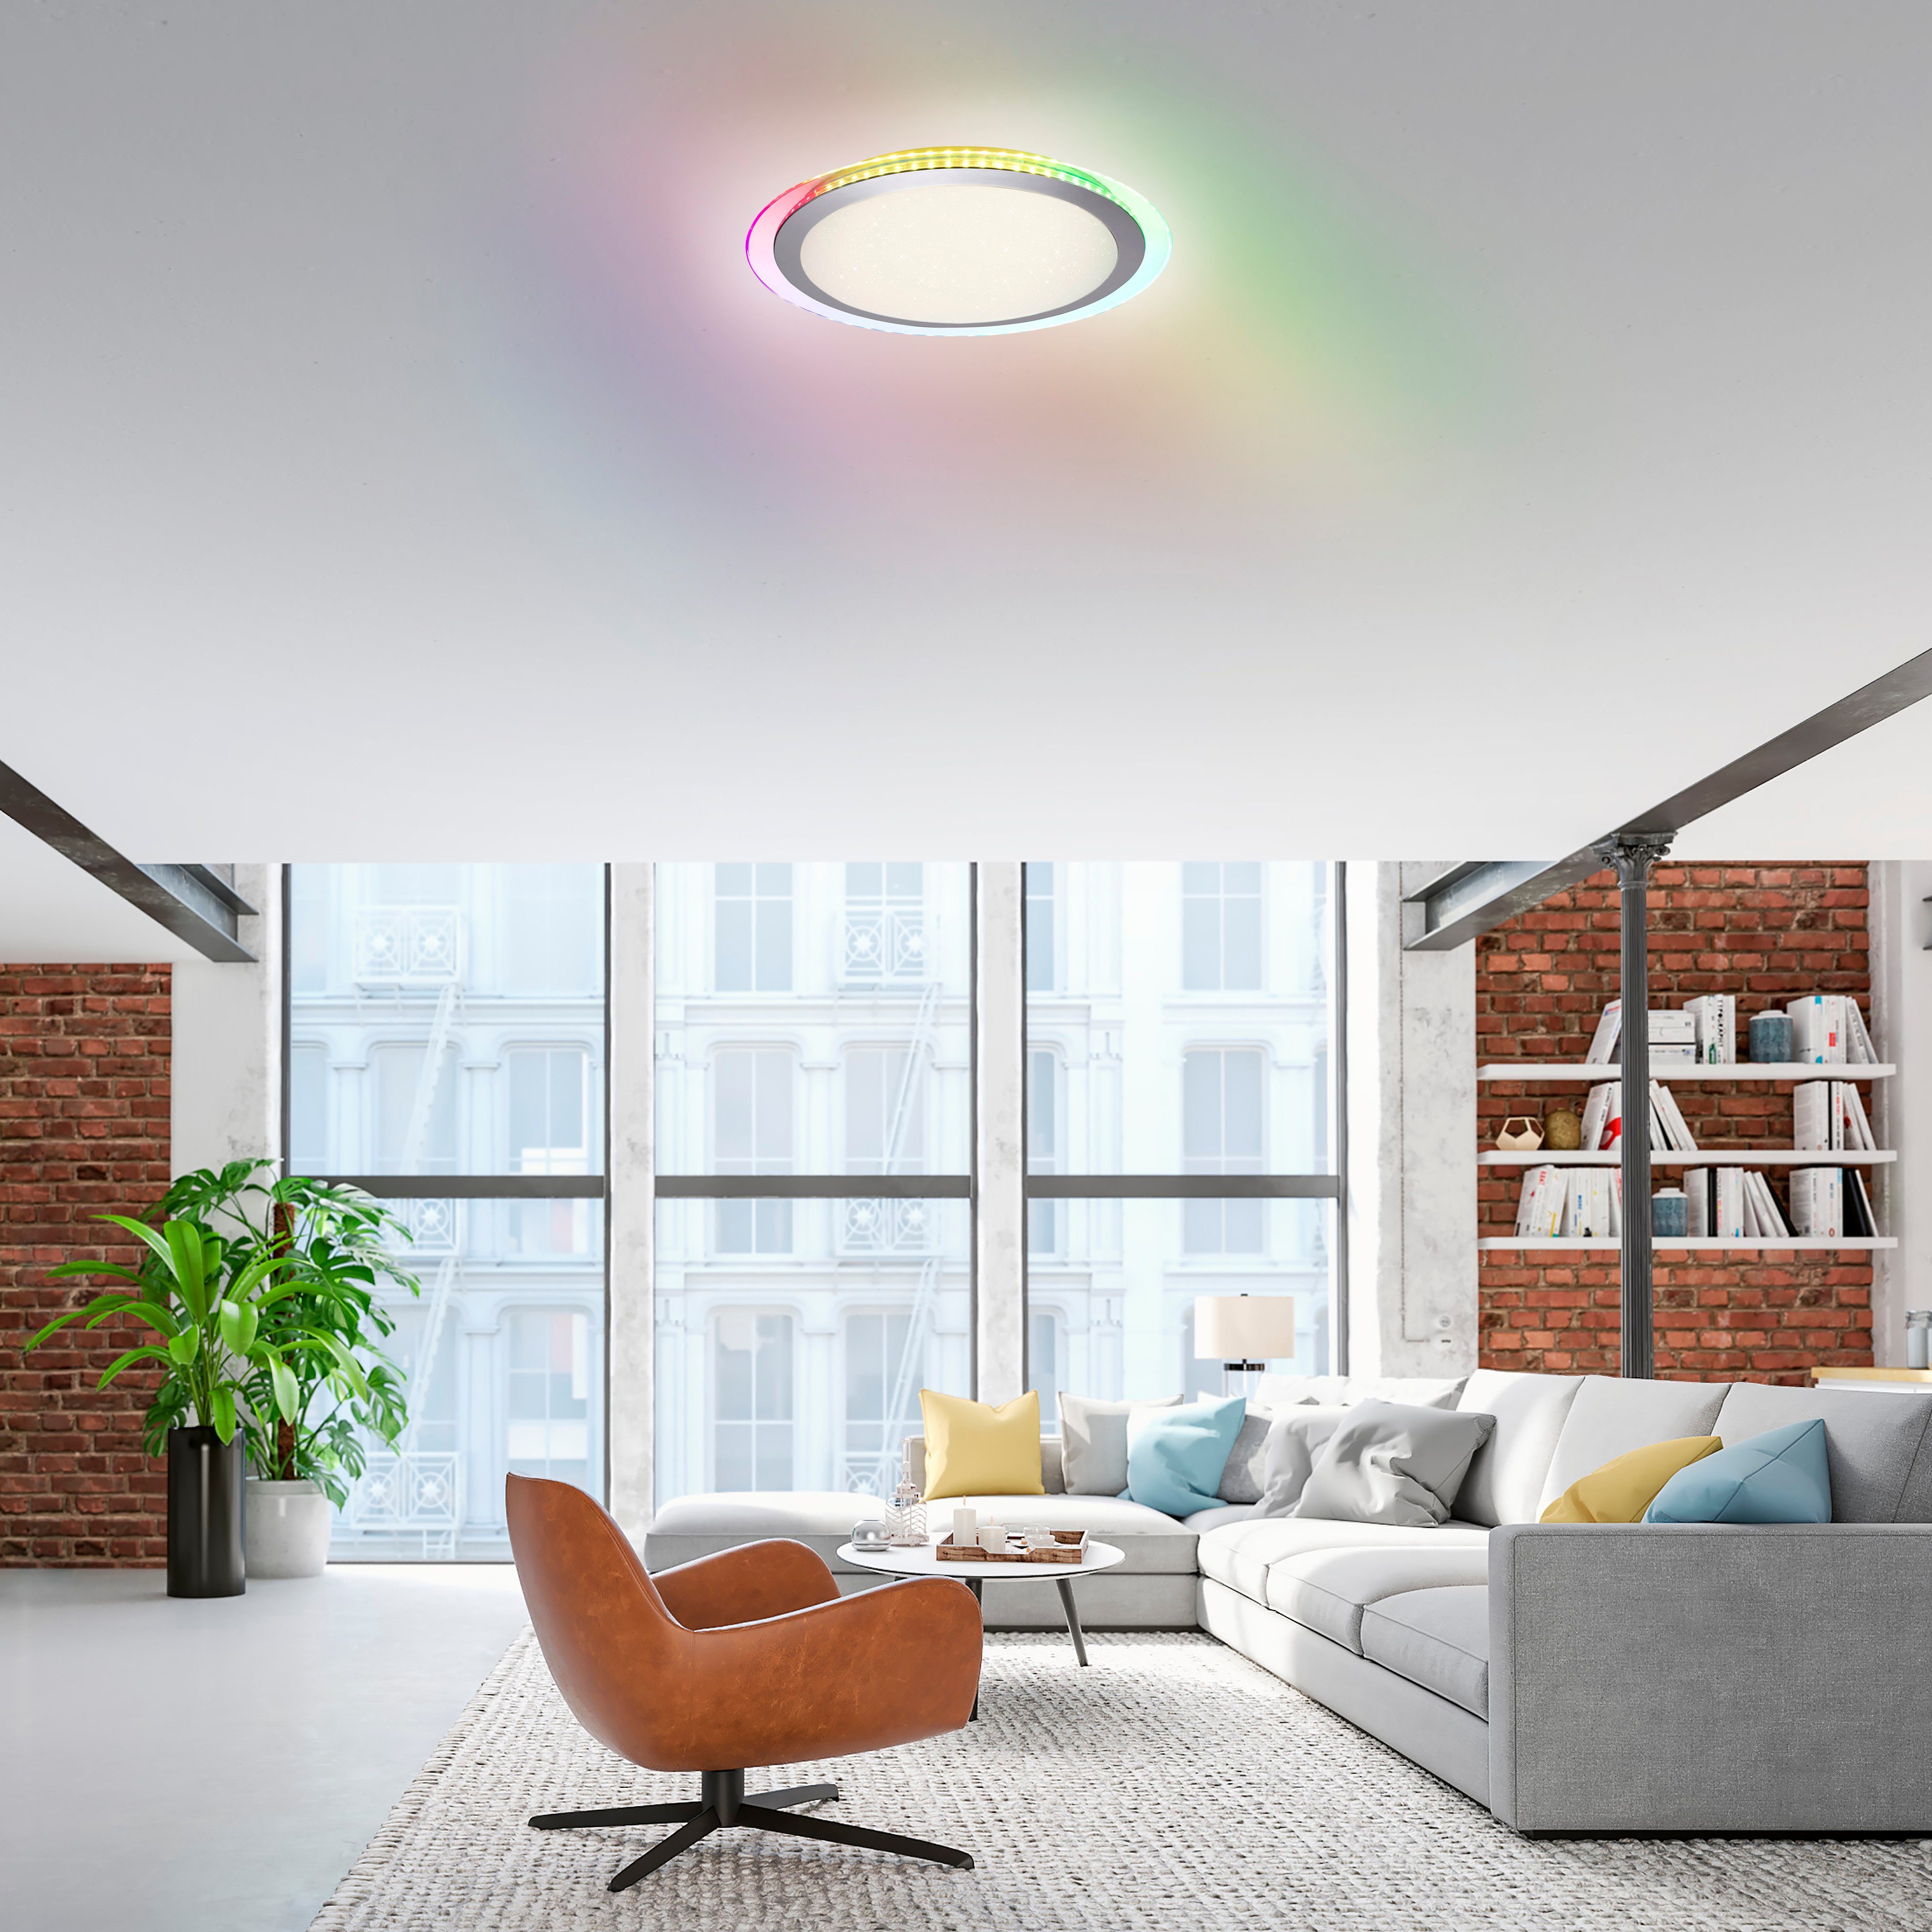 Fernbedienung, CCT - Leuchten - inkl. kaltweiß, fest LED, Infrarot RGB-Rainbow, LED über integriert, Direkt warmweiß Deckenleuchte CYBA, dimmbar,